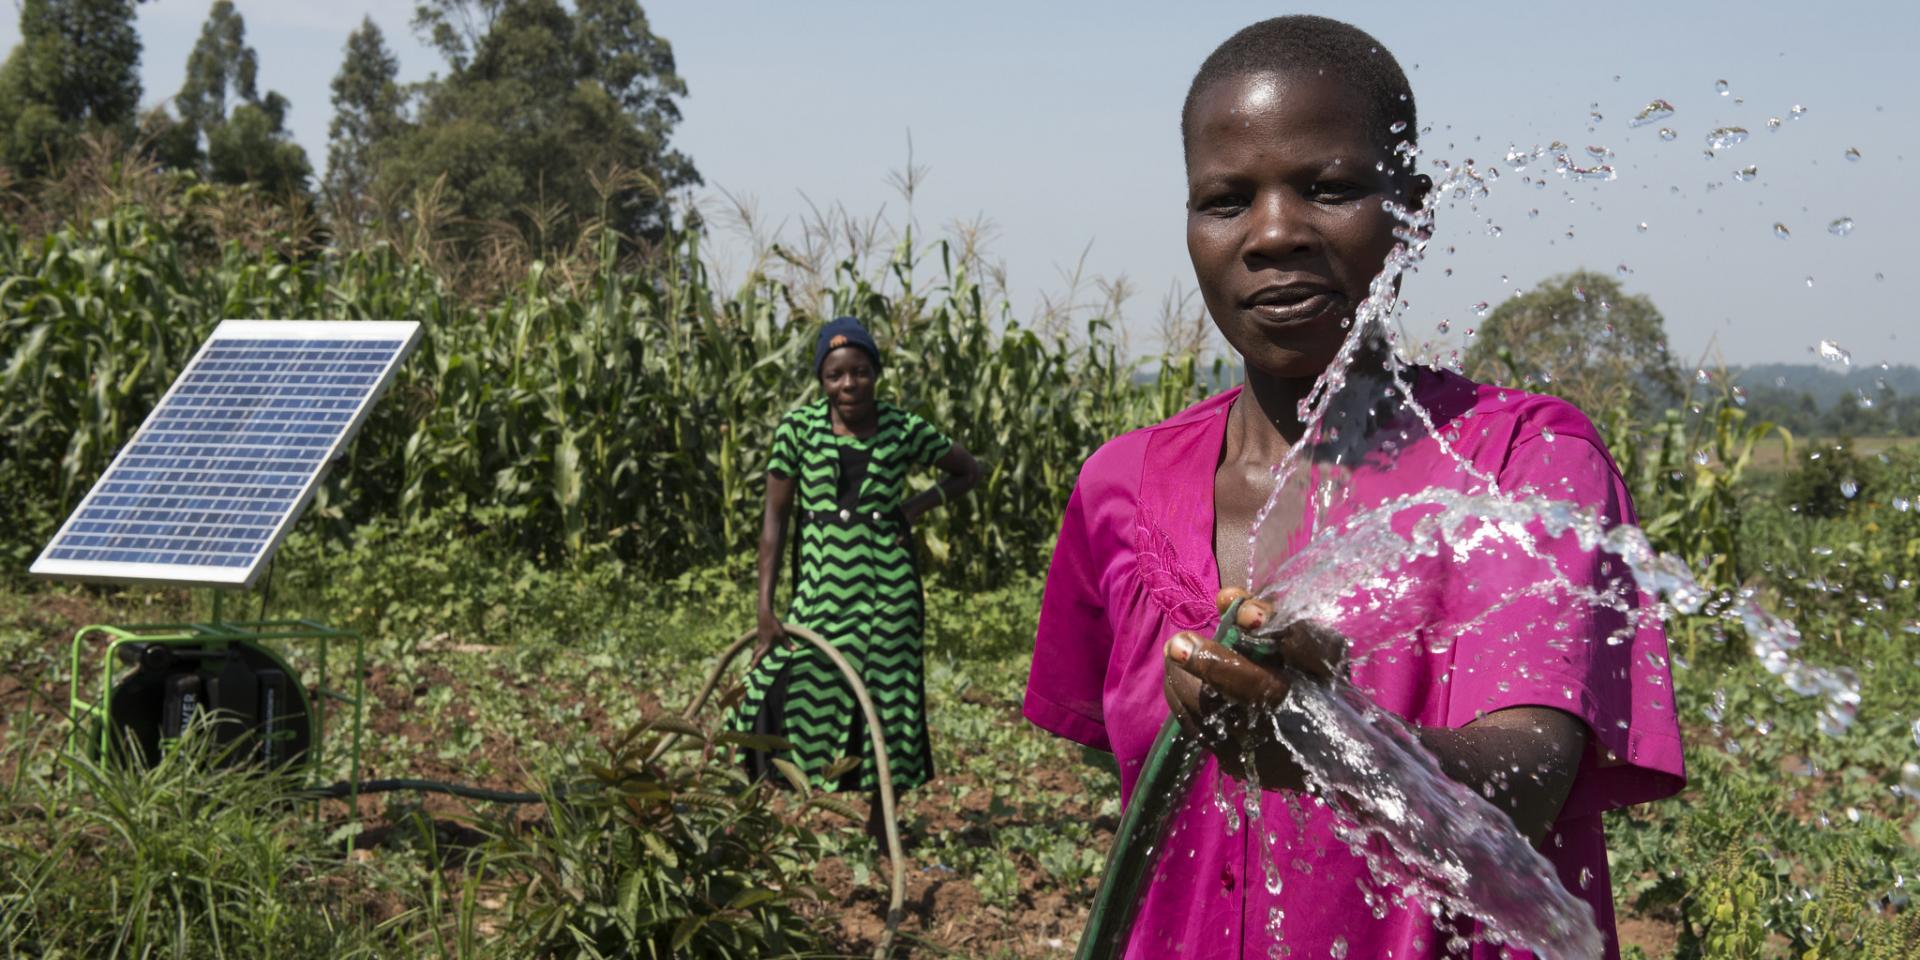 Irrigating a farm using solar-powered water pump, Kenya.